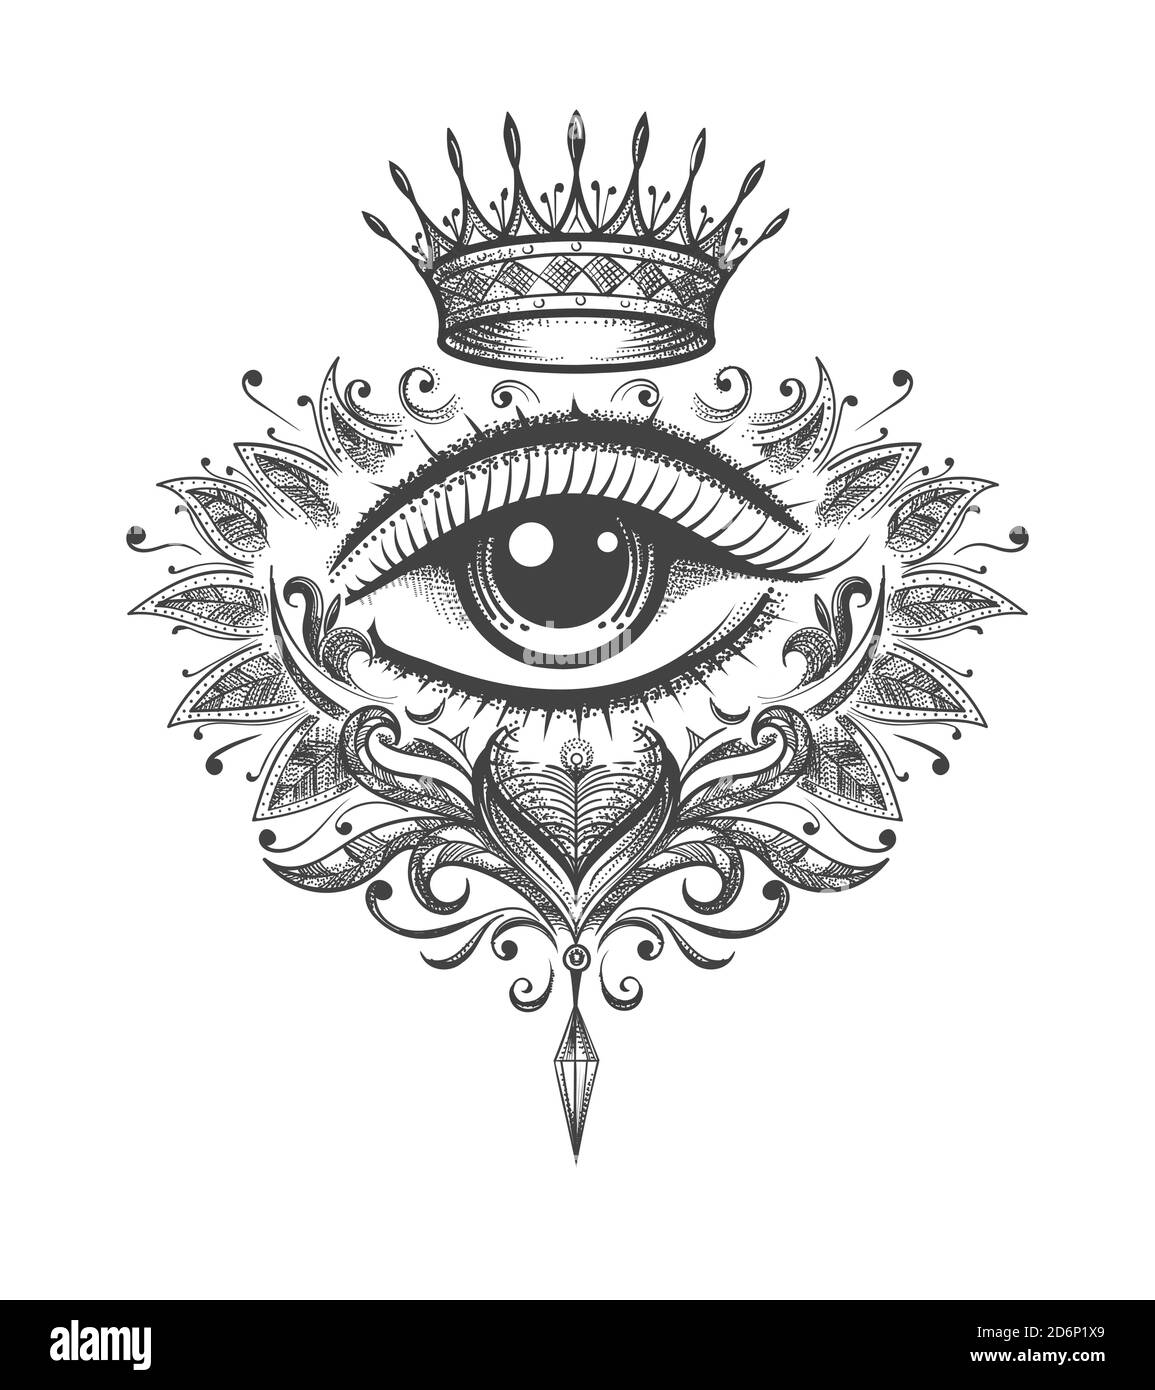 All Seeing Eye Triangle Geometric Vector Design Providance Pyramid Tattoo  Symbol With Occult Secret Hand Sign Mystic Spiritual Illuminati Emblem  Sketch Drawing Illustration Stock Illustration - Download Image Now - iStock